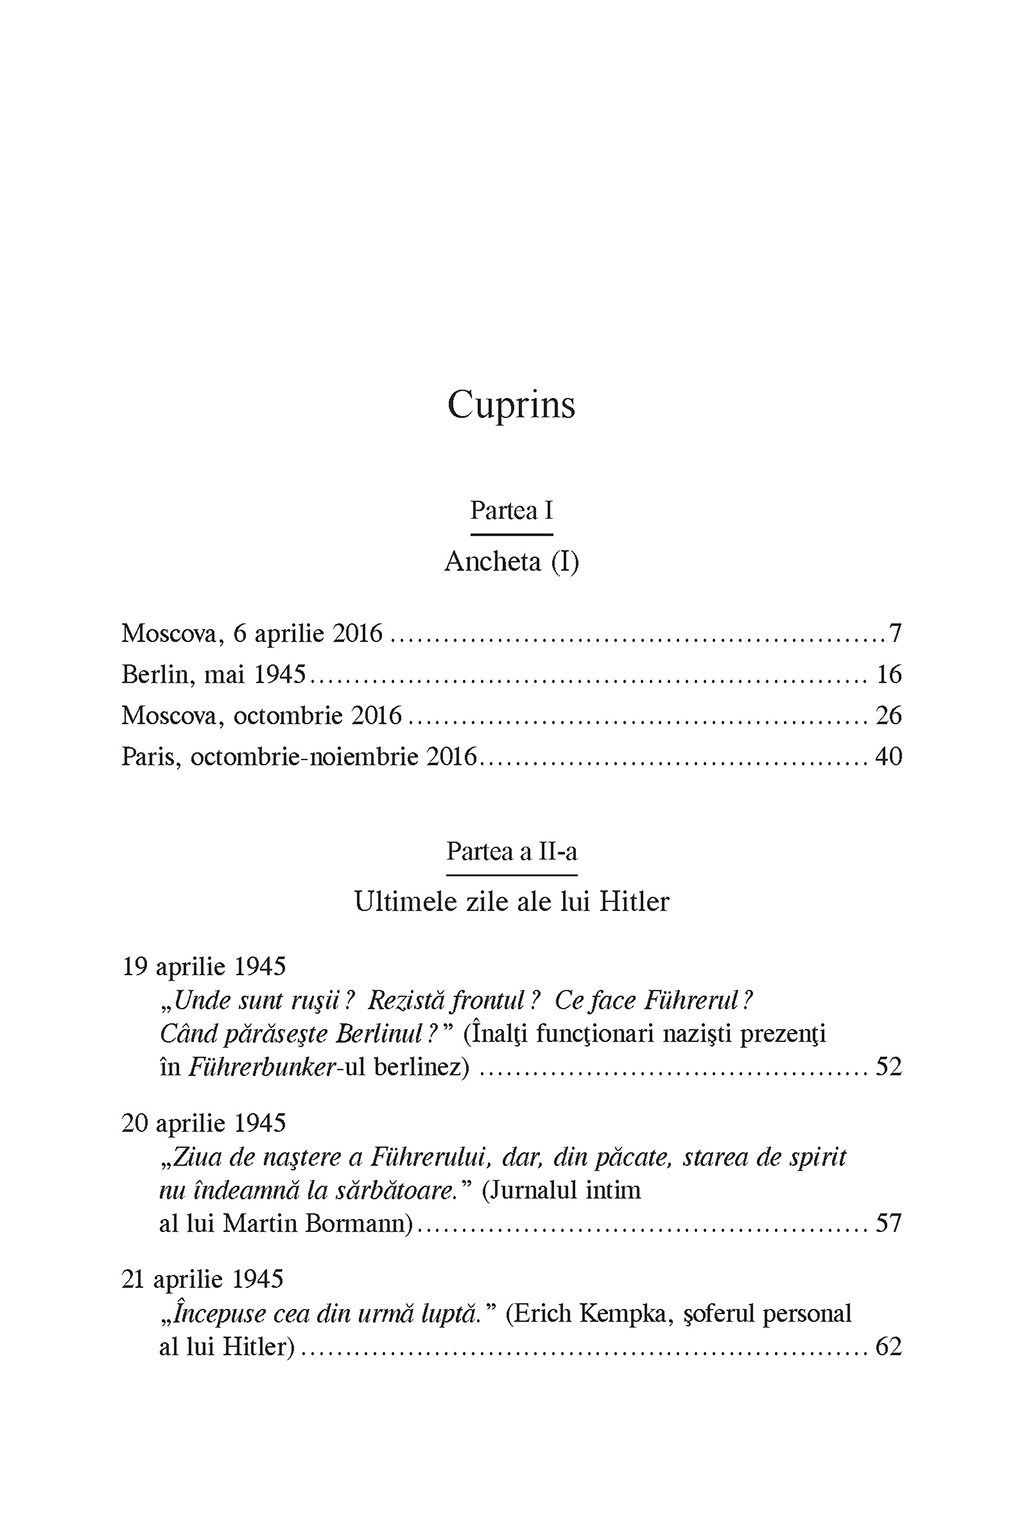 Poze Moartea lui Hitler | Jean-Christophe Brisard, Lana Parshina